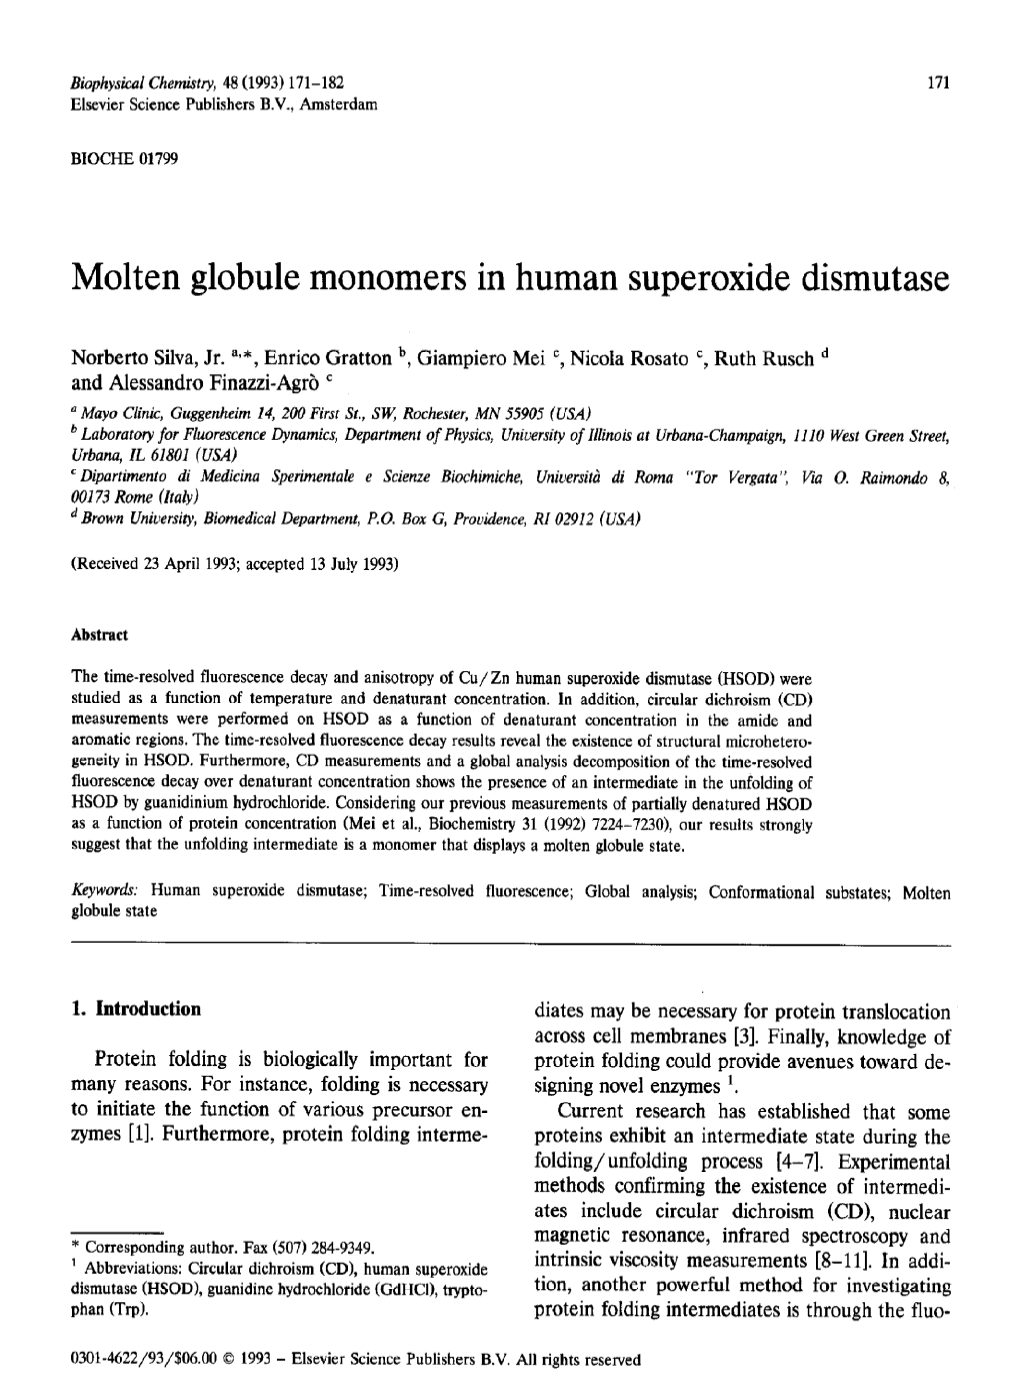 Molten Globule Monomers in Human Superoxide Dismutase